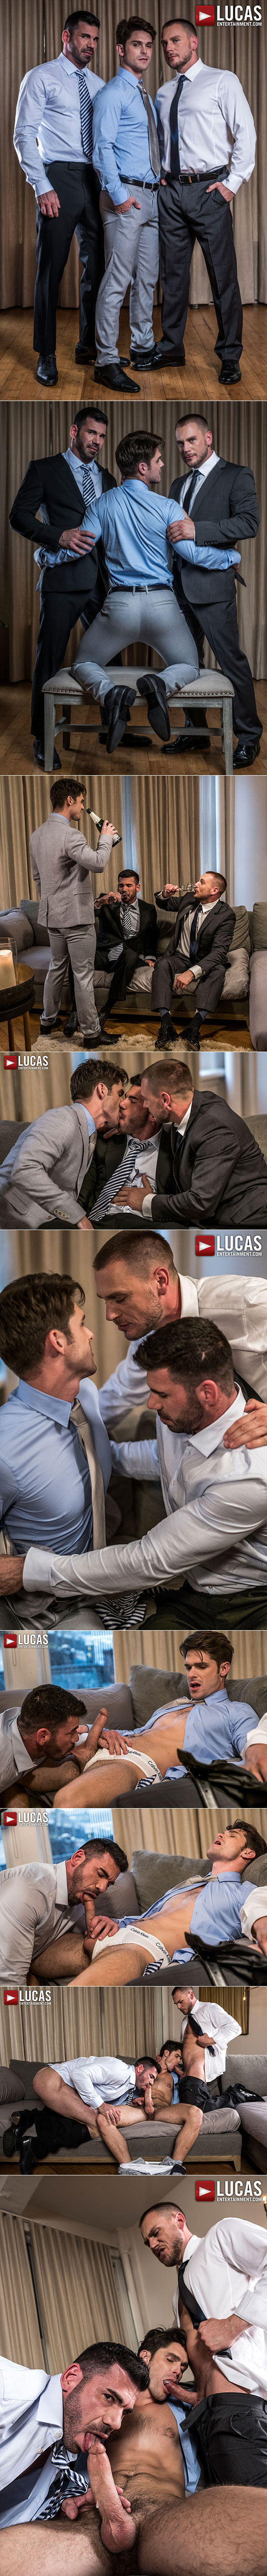 Lucas Entertainment: Hans Berlin, Billy Santoro and Devin Franco's raw threesome in "Gentlemen 21: Top Management"